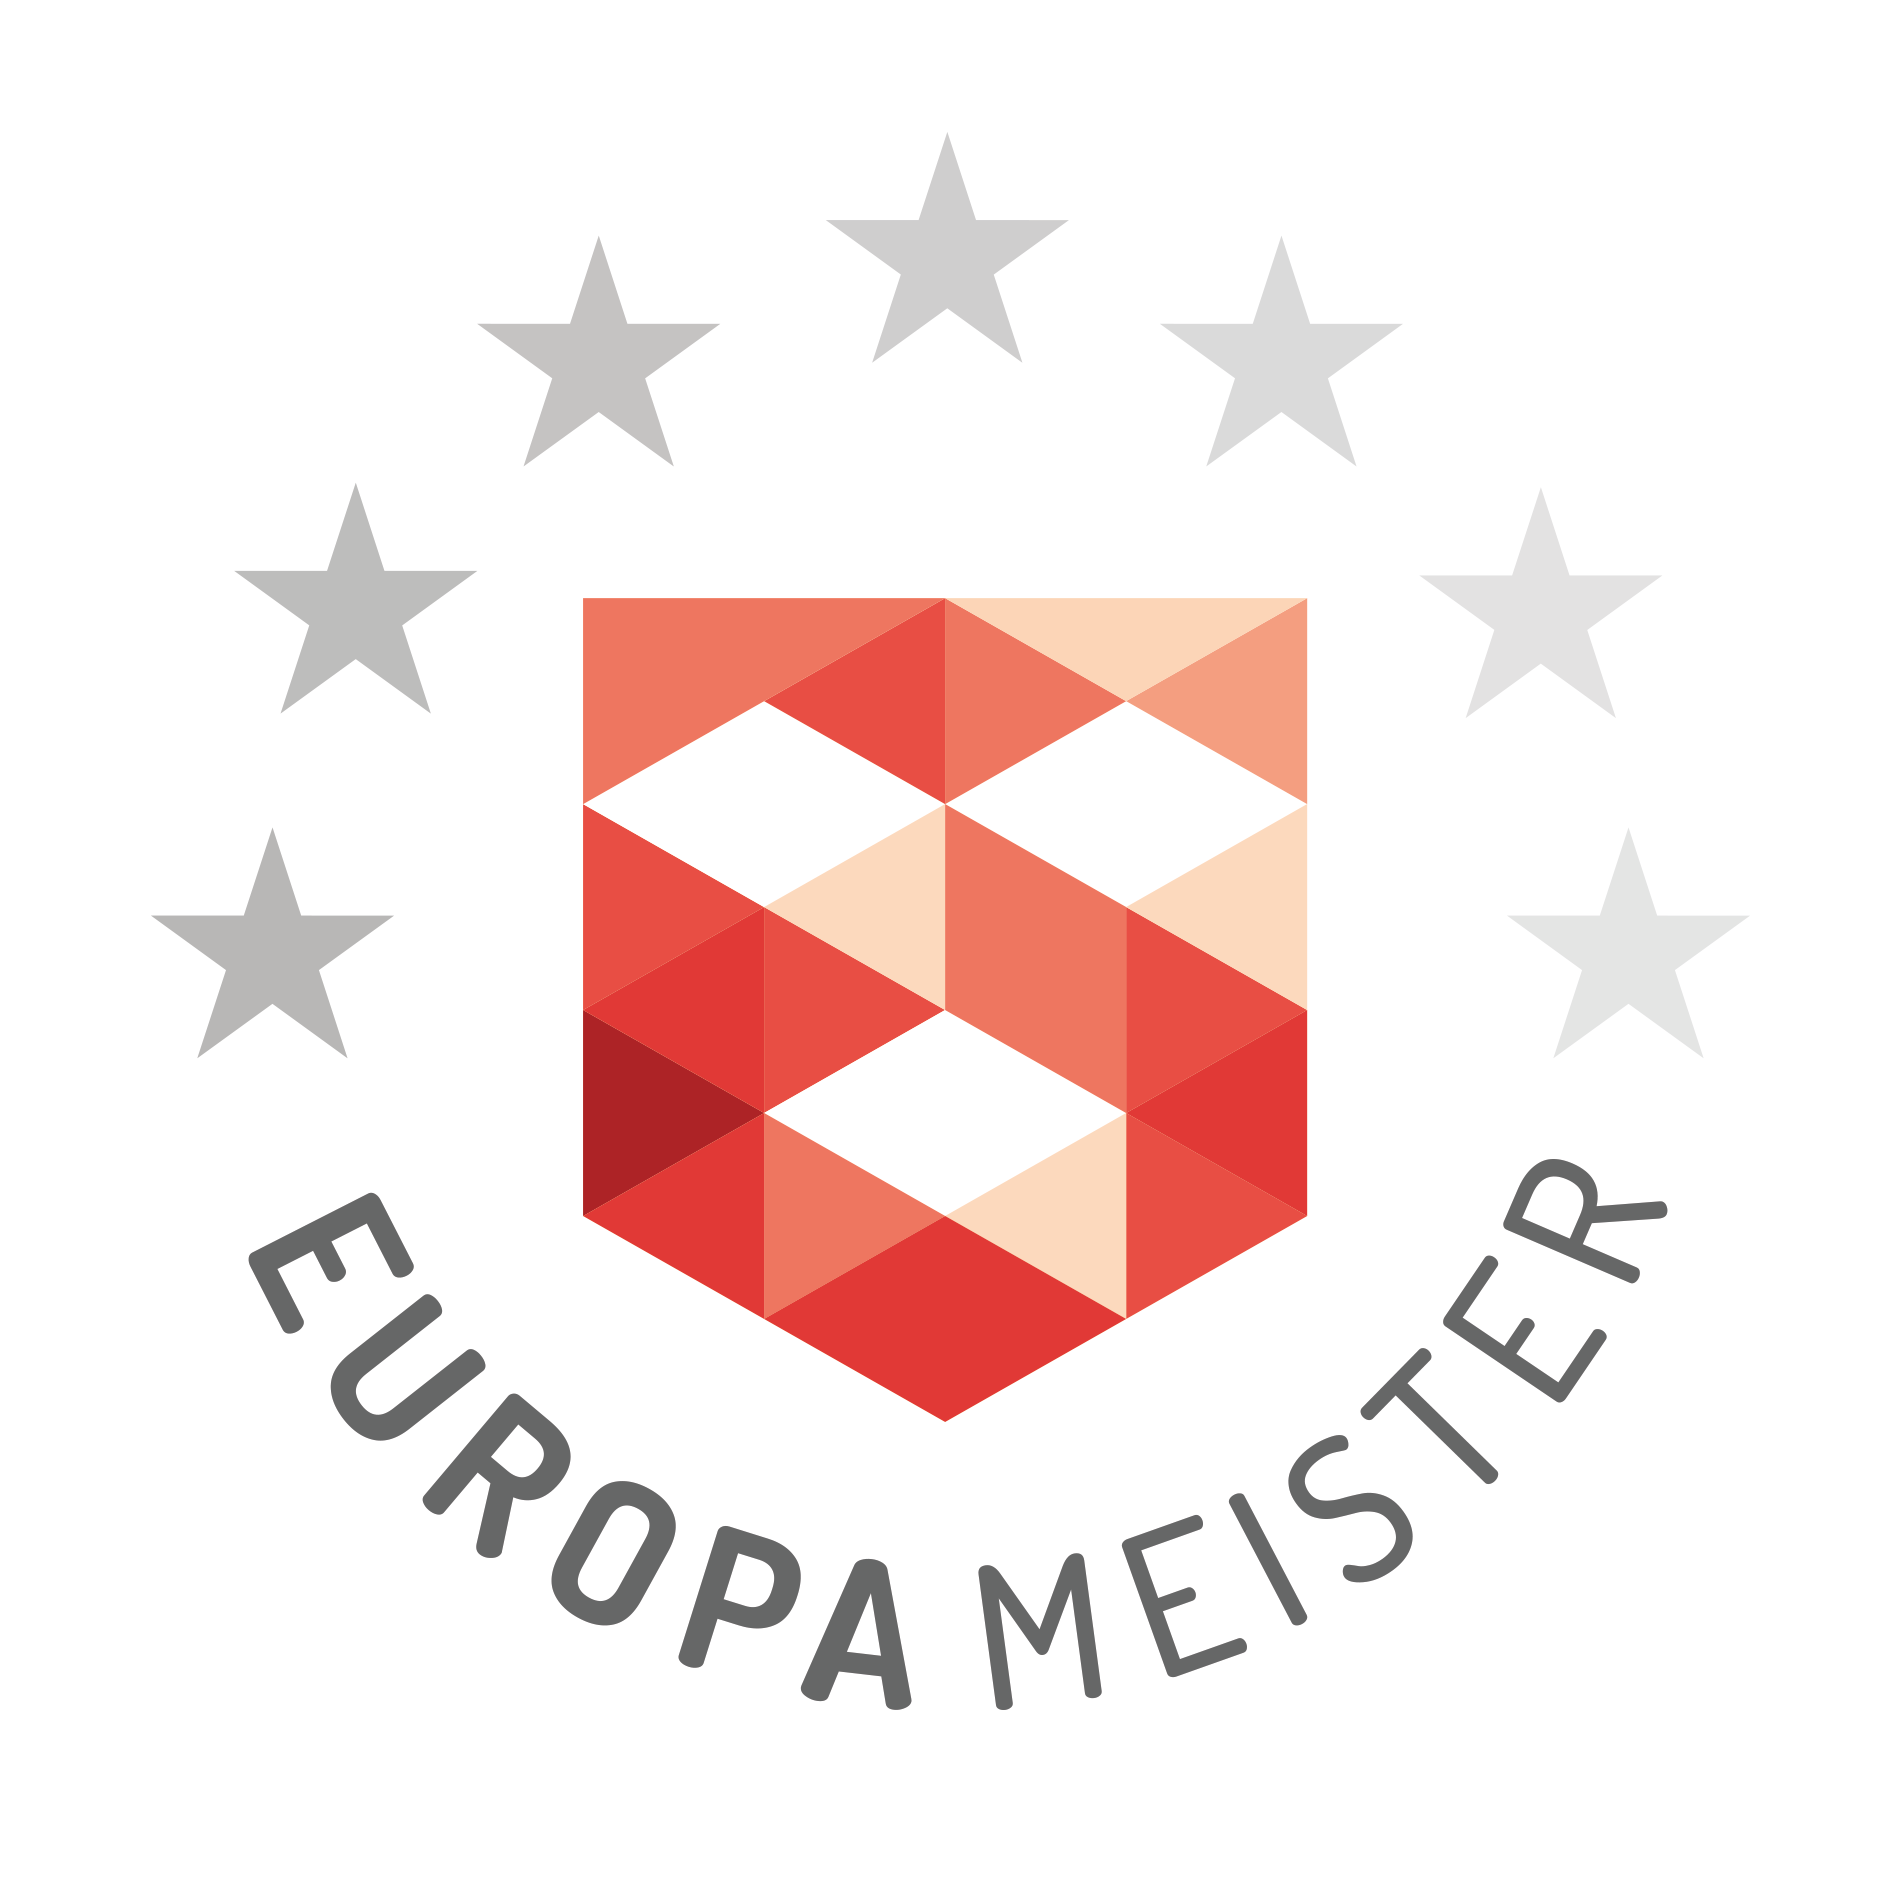 europameister logo cmyk